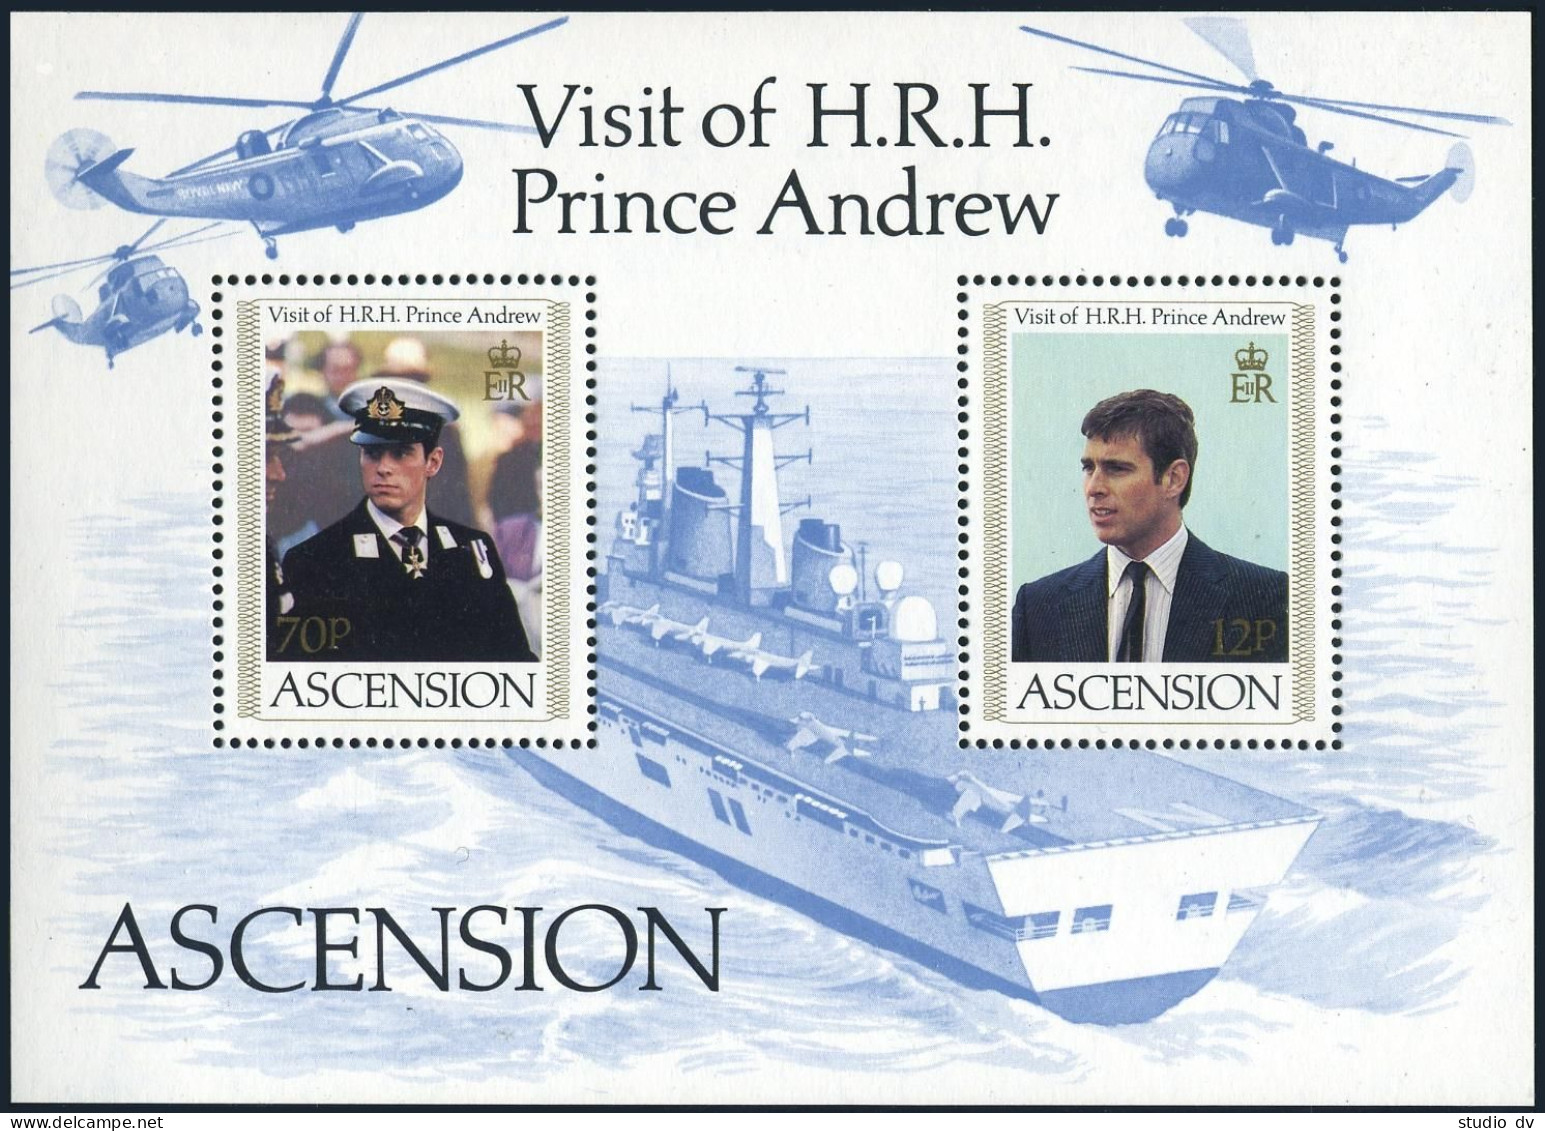 Ascension 349 Sheet,MNH.Michel Bl.14. Prince Andrew,visit 1984.Ship,Helicopter. - Ascension